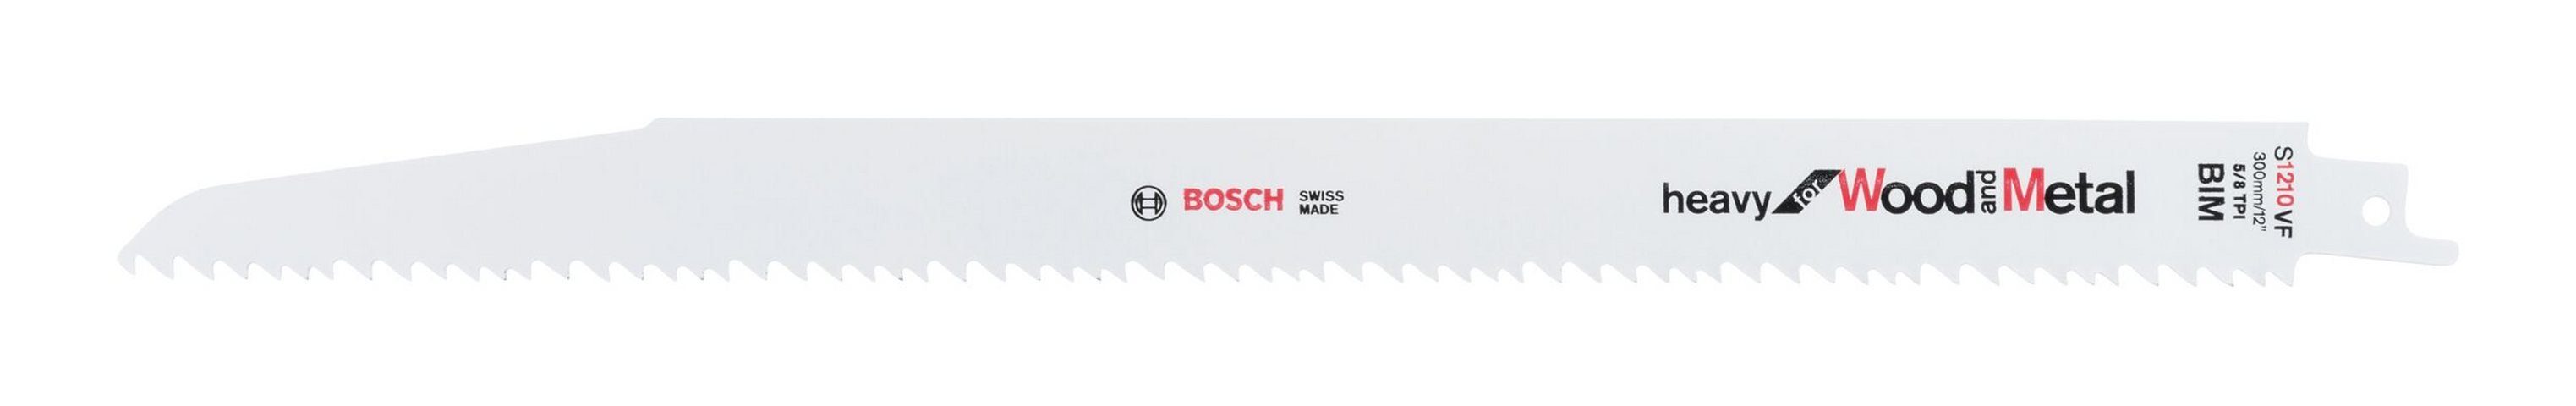 1210 (5 Metal and - VF Stück), S for BOSCH 5er-Pack Heavy Säbelsägeblatt Wood